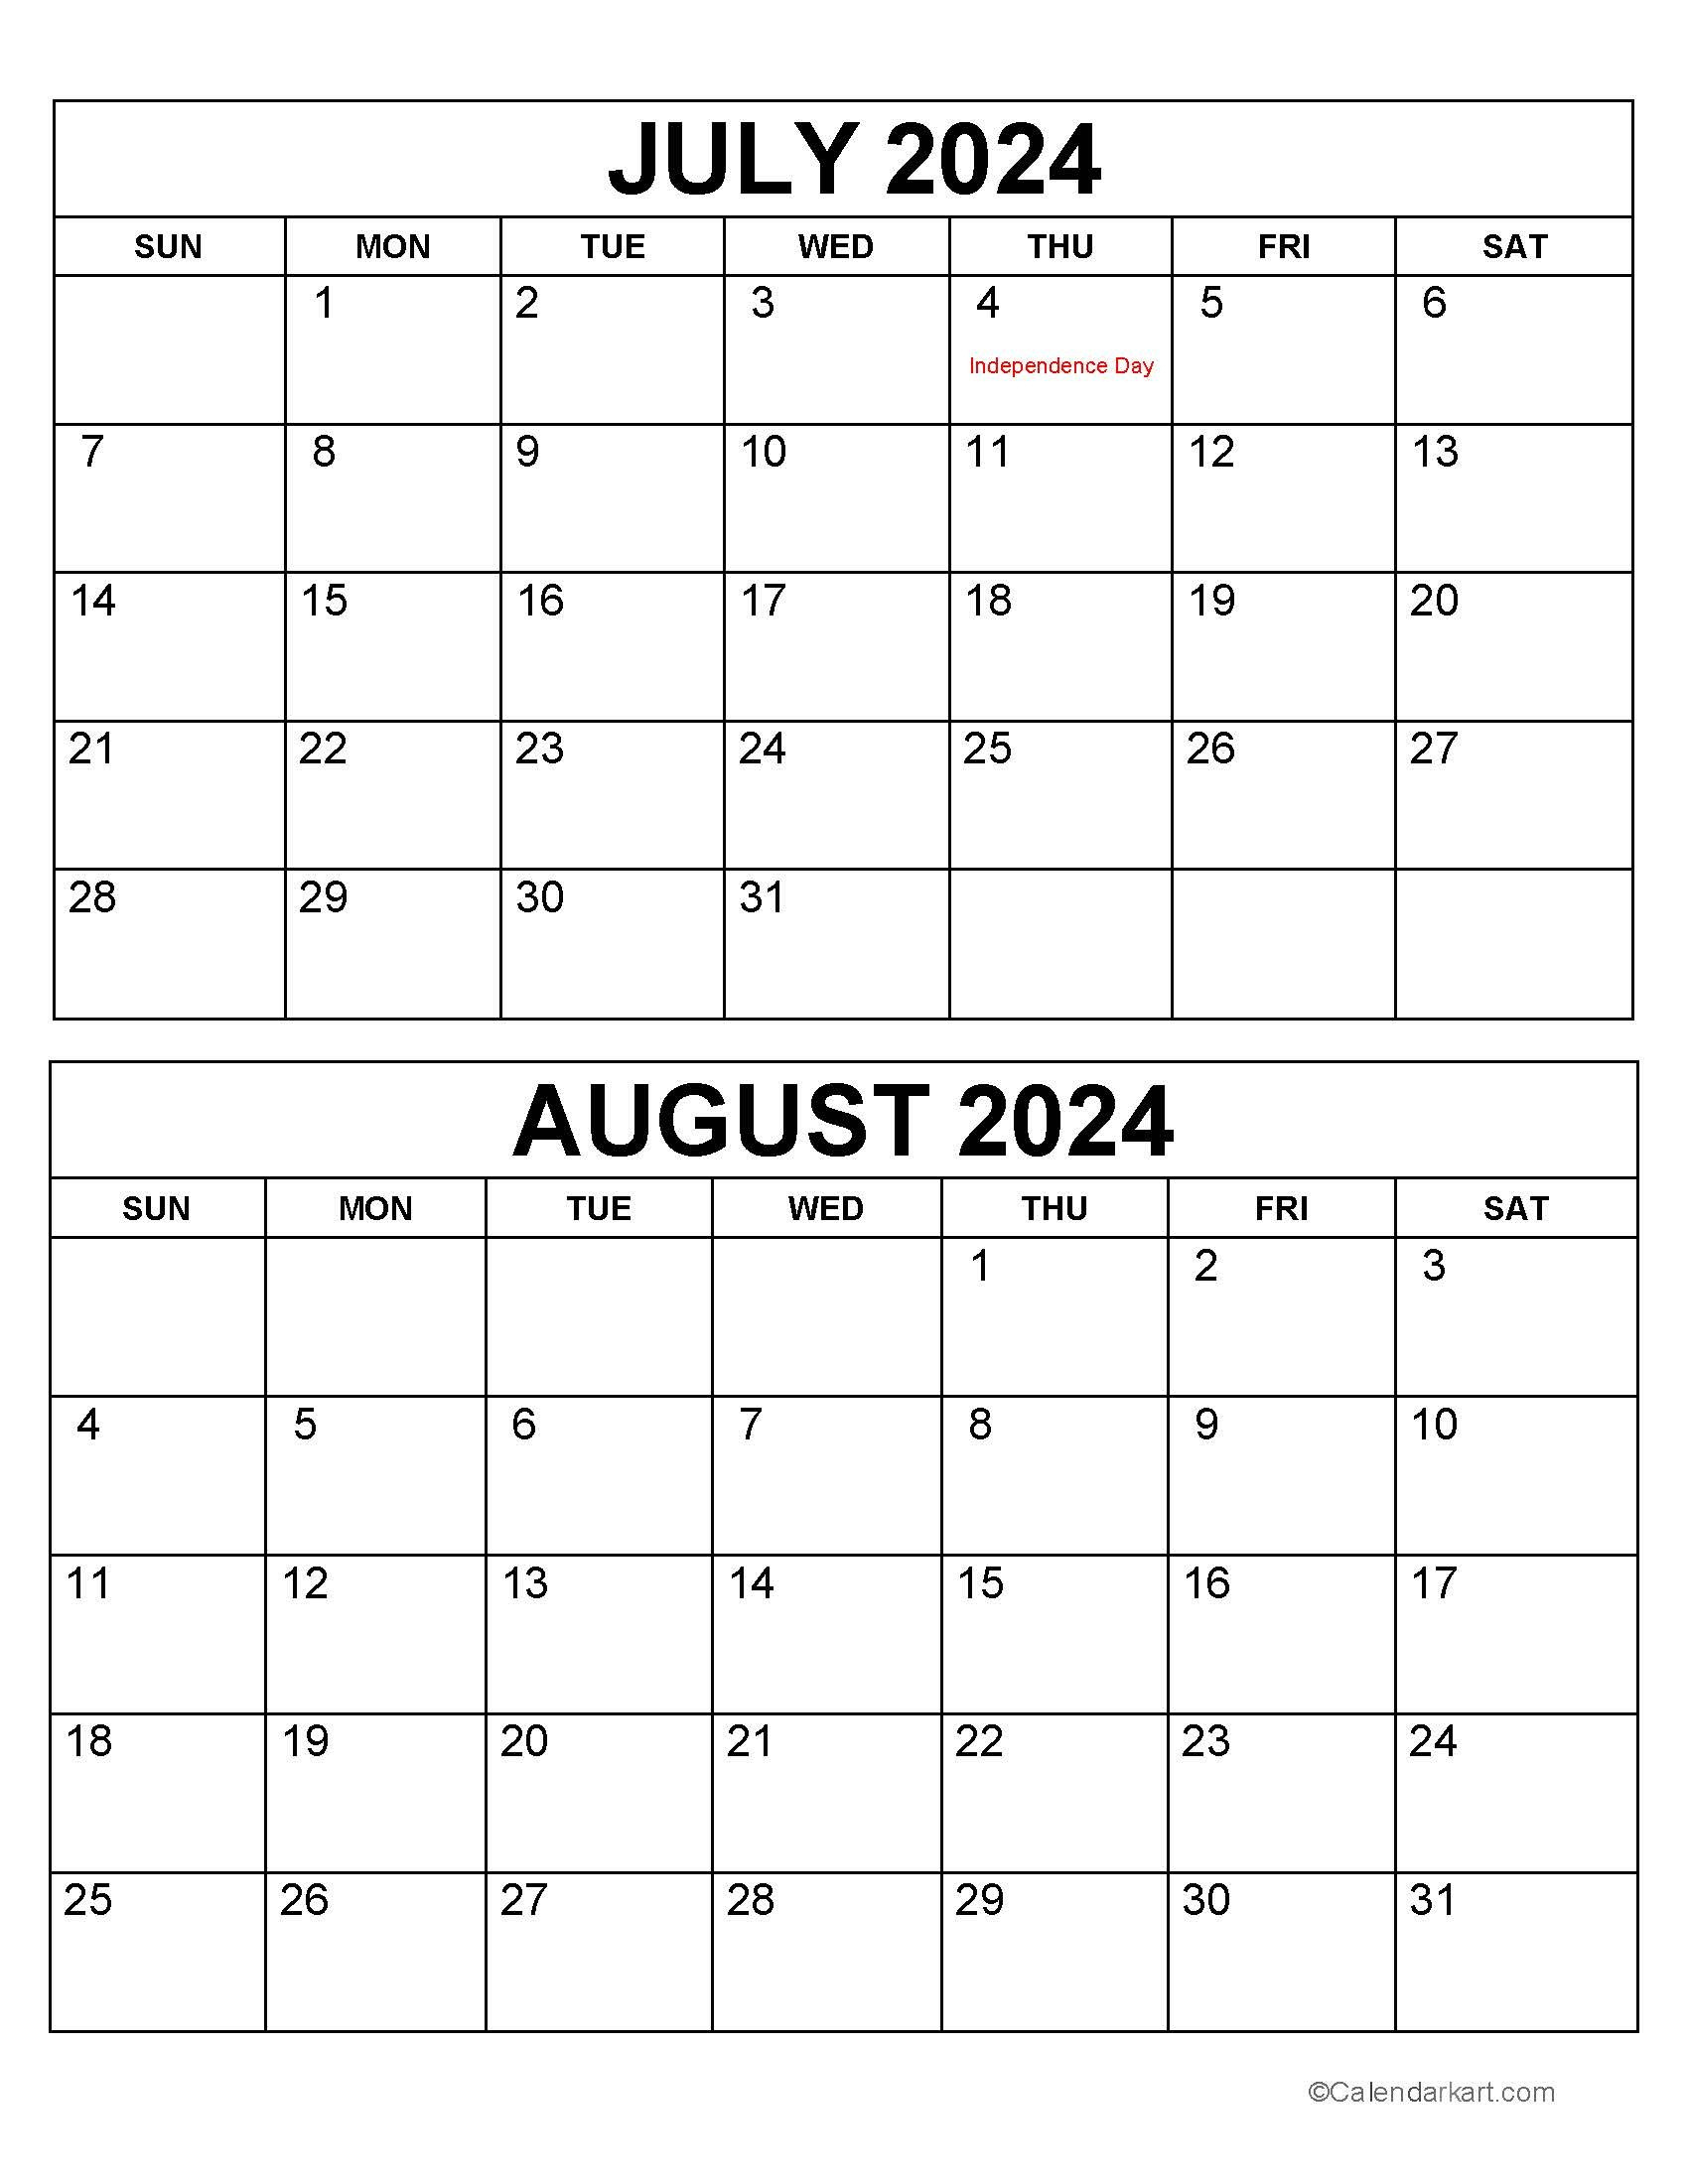 Printable July August 2024 Calendar | Calendarkart regarding Calendar June July August 2024 Printable